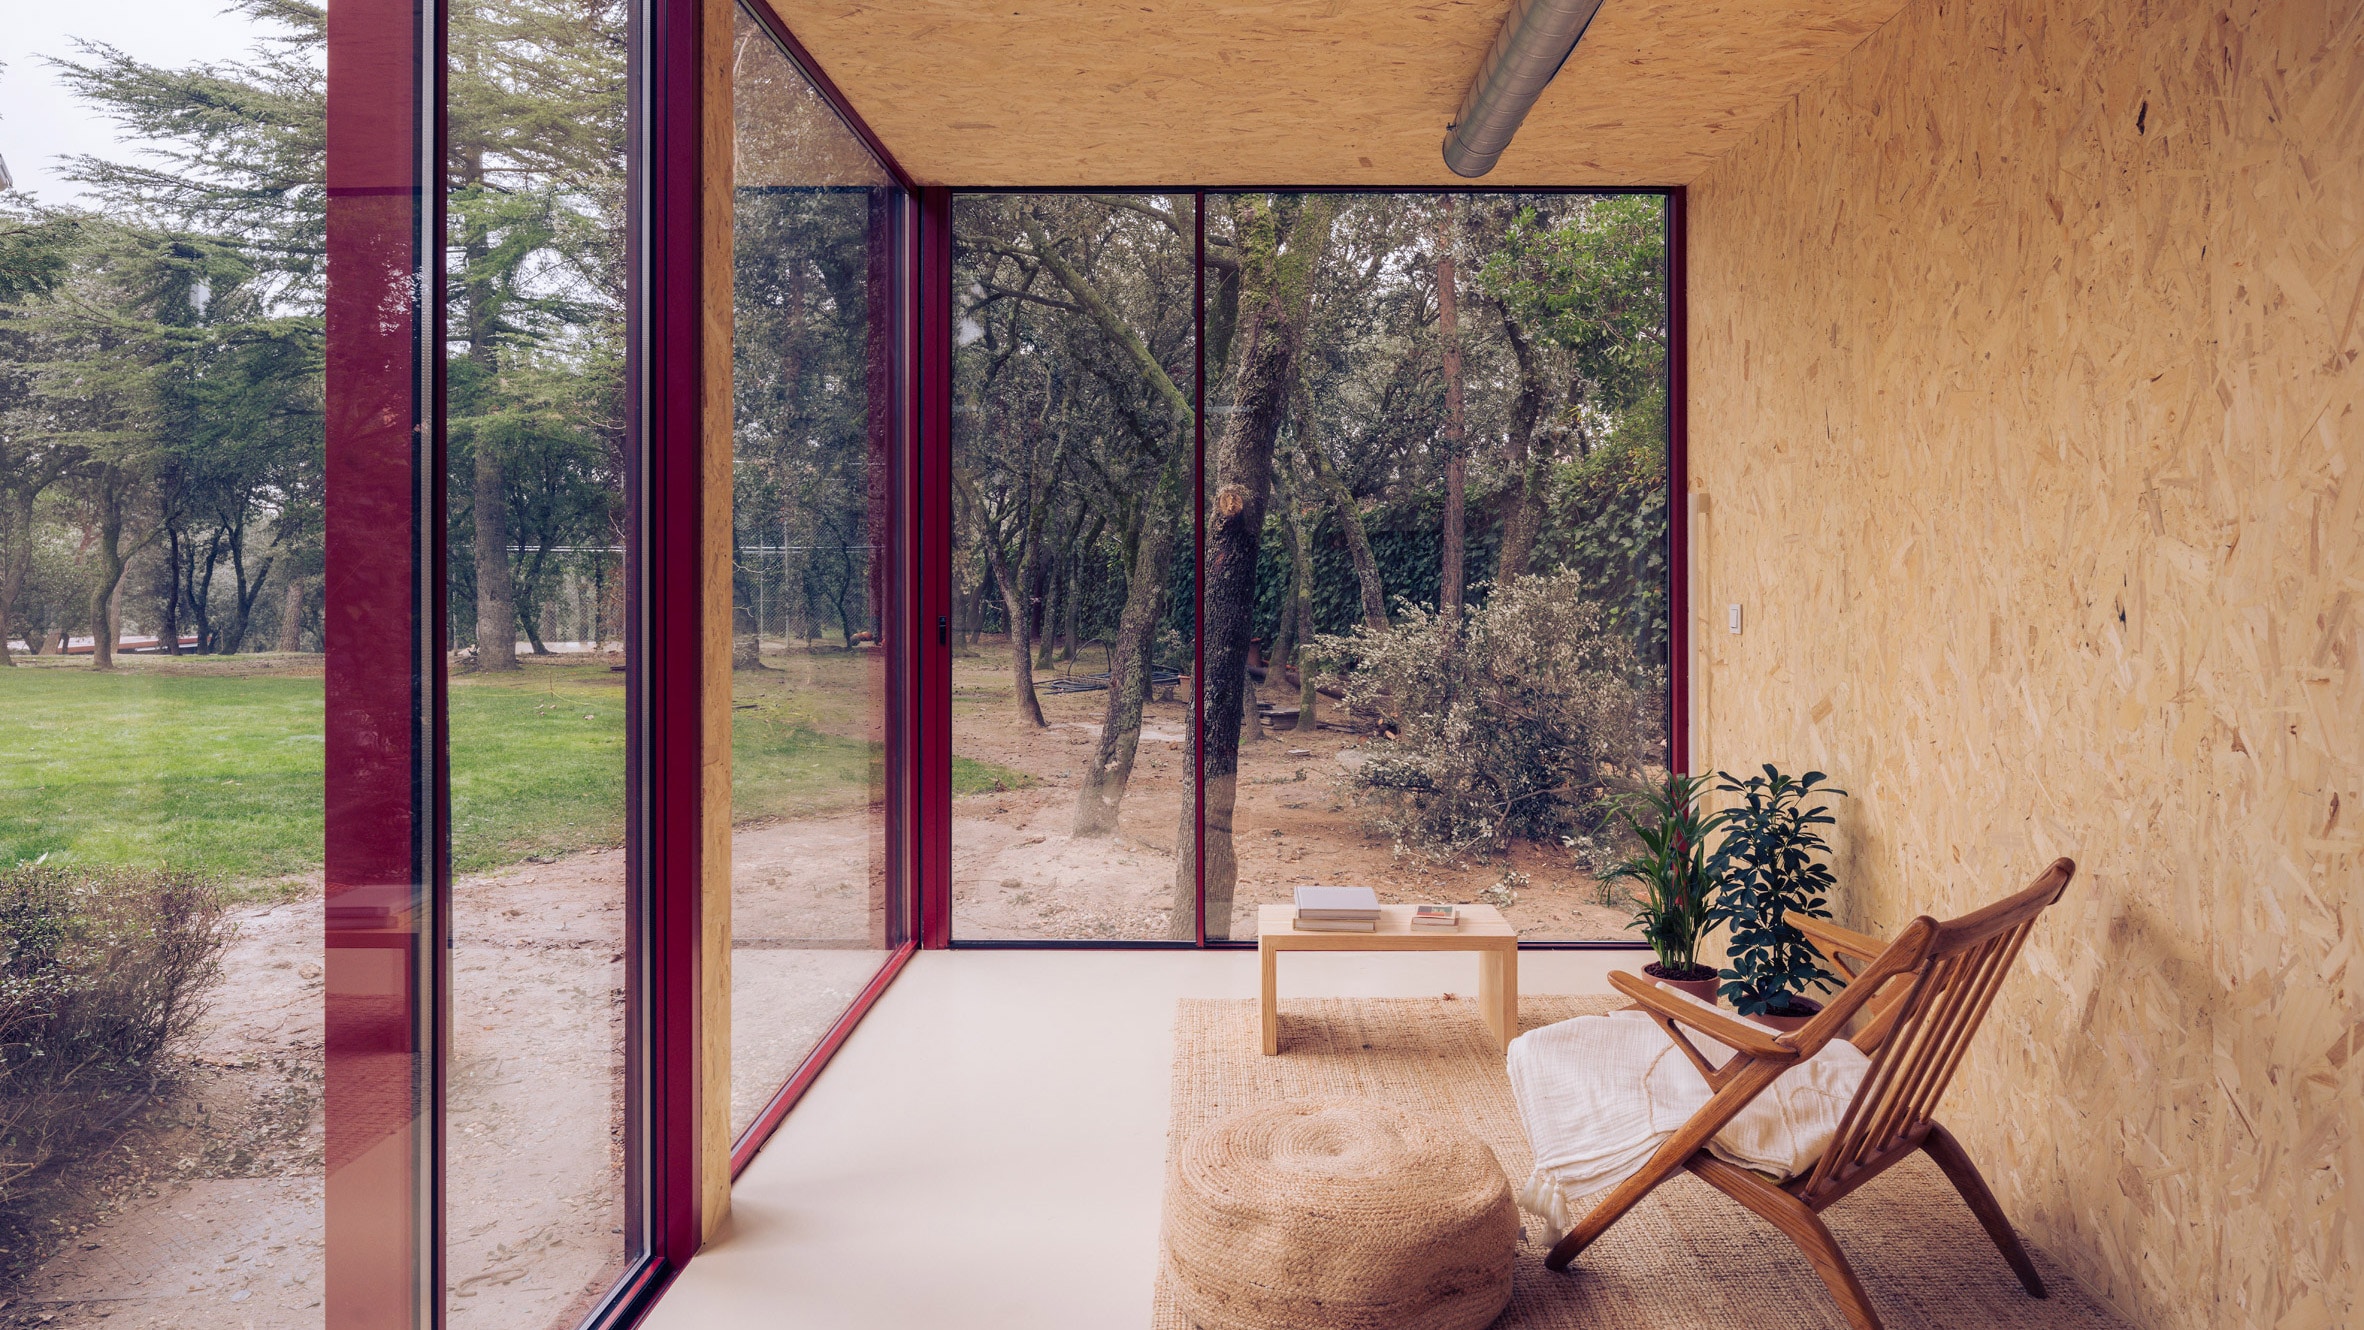 The Tini' Is a Light-Filled, Minimalist Prefab Tiny Home